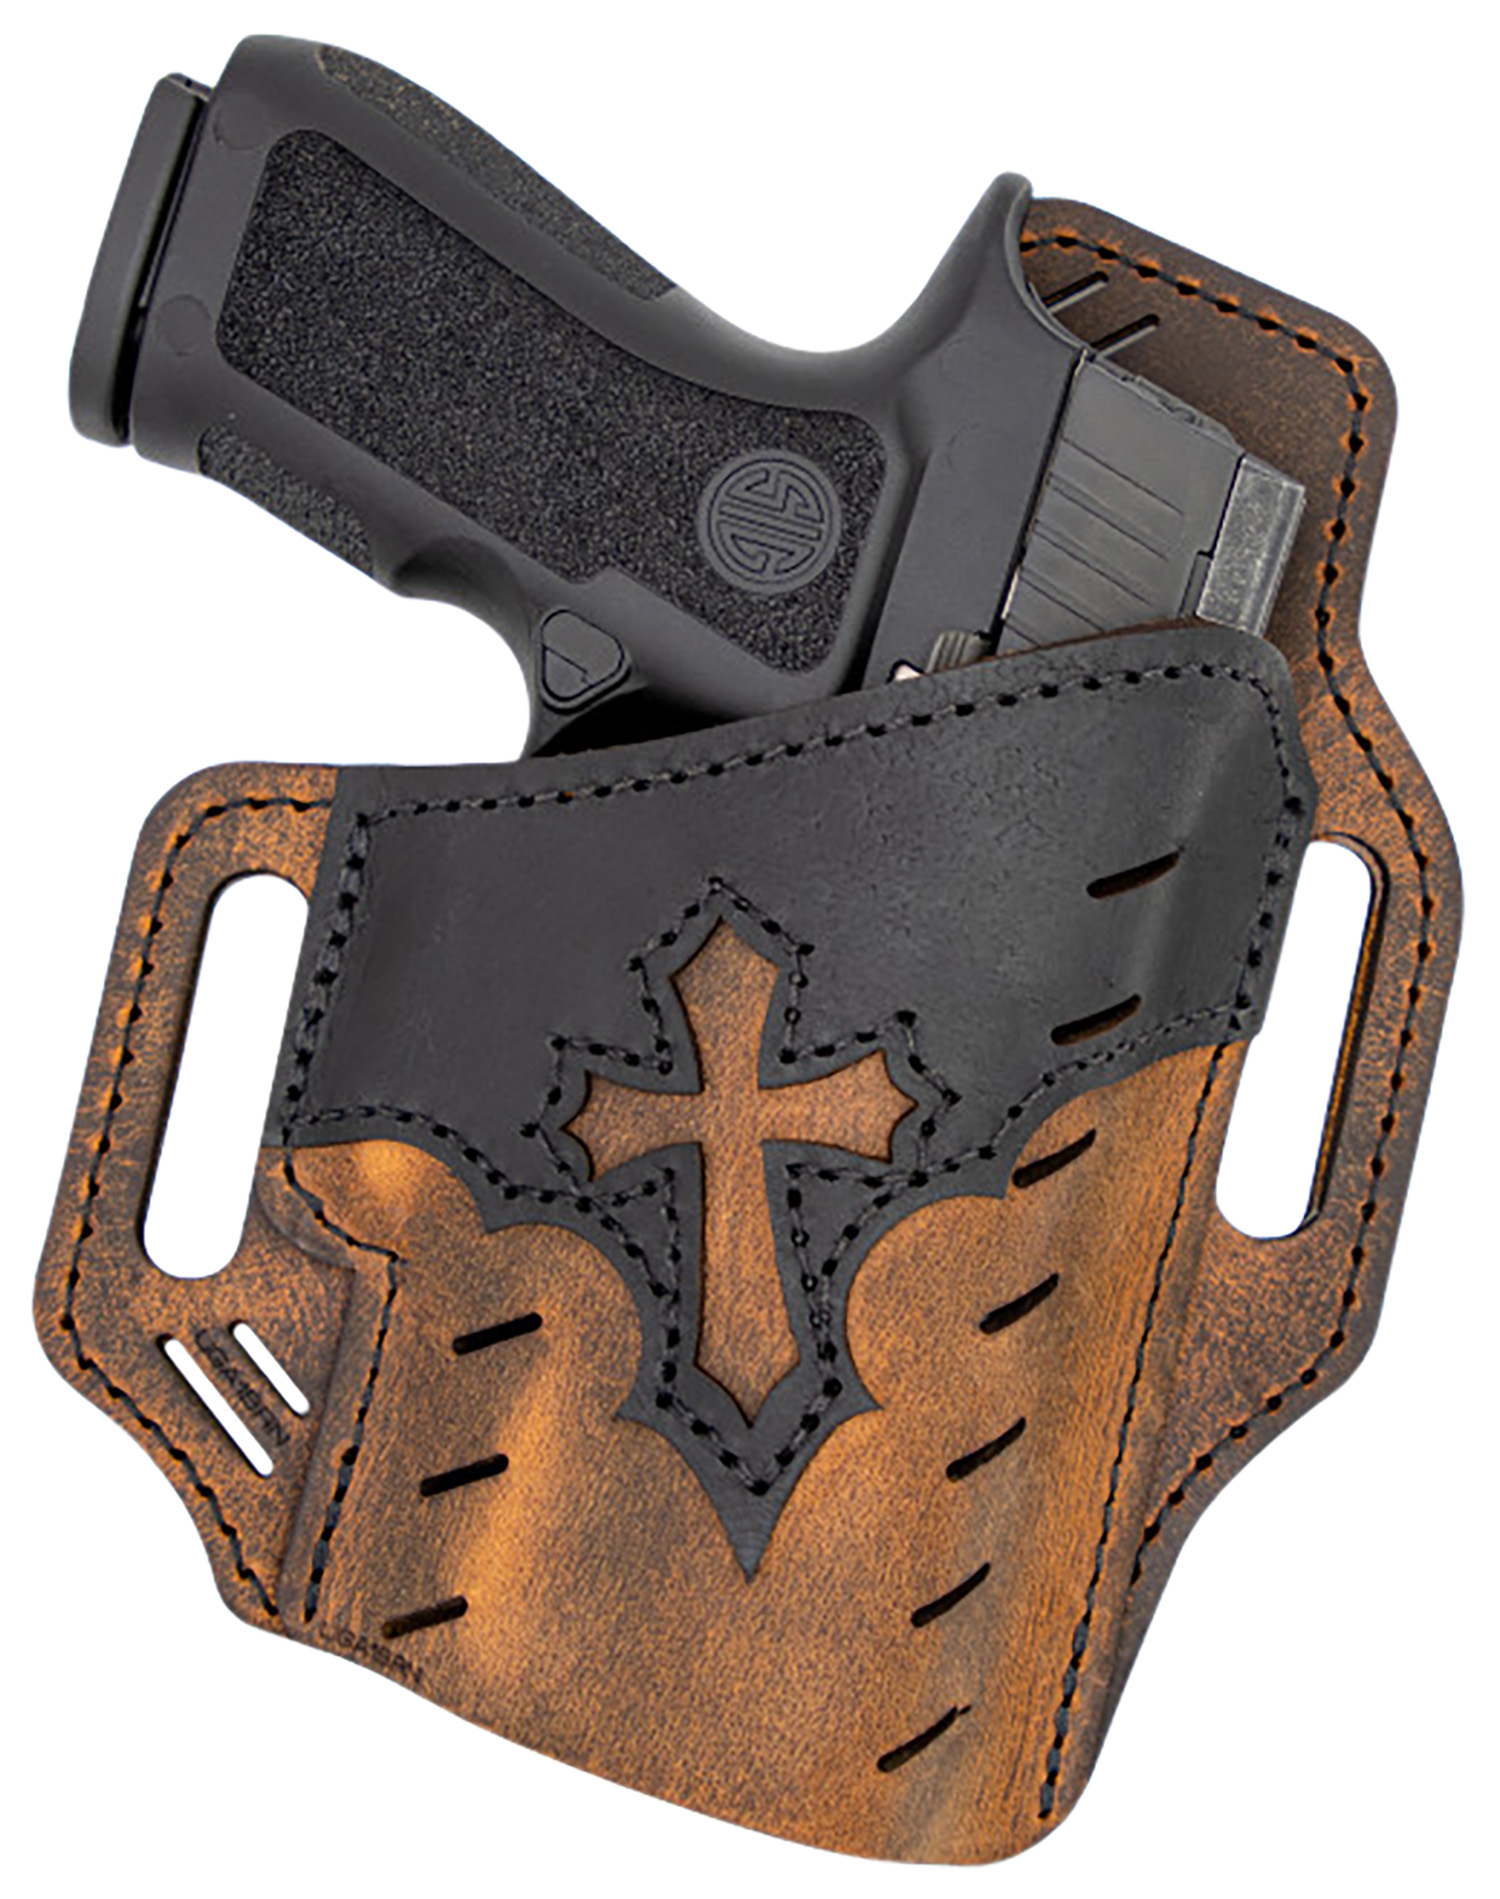 Taser Pulse Kryptek Edition: Compact Self-Defense Weapon